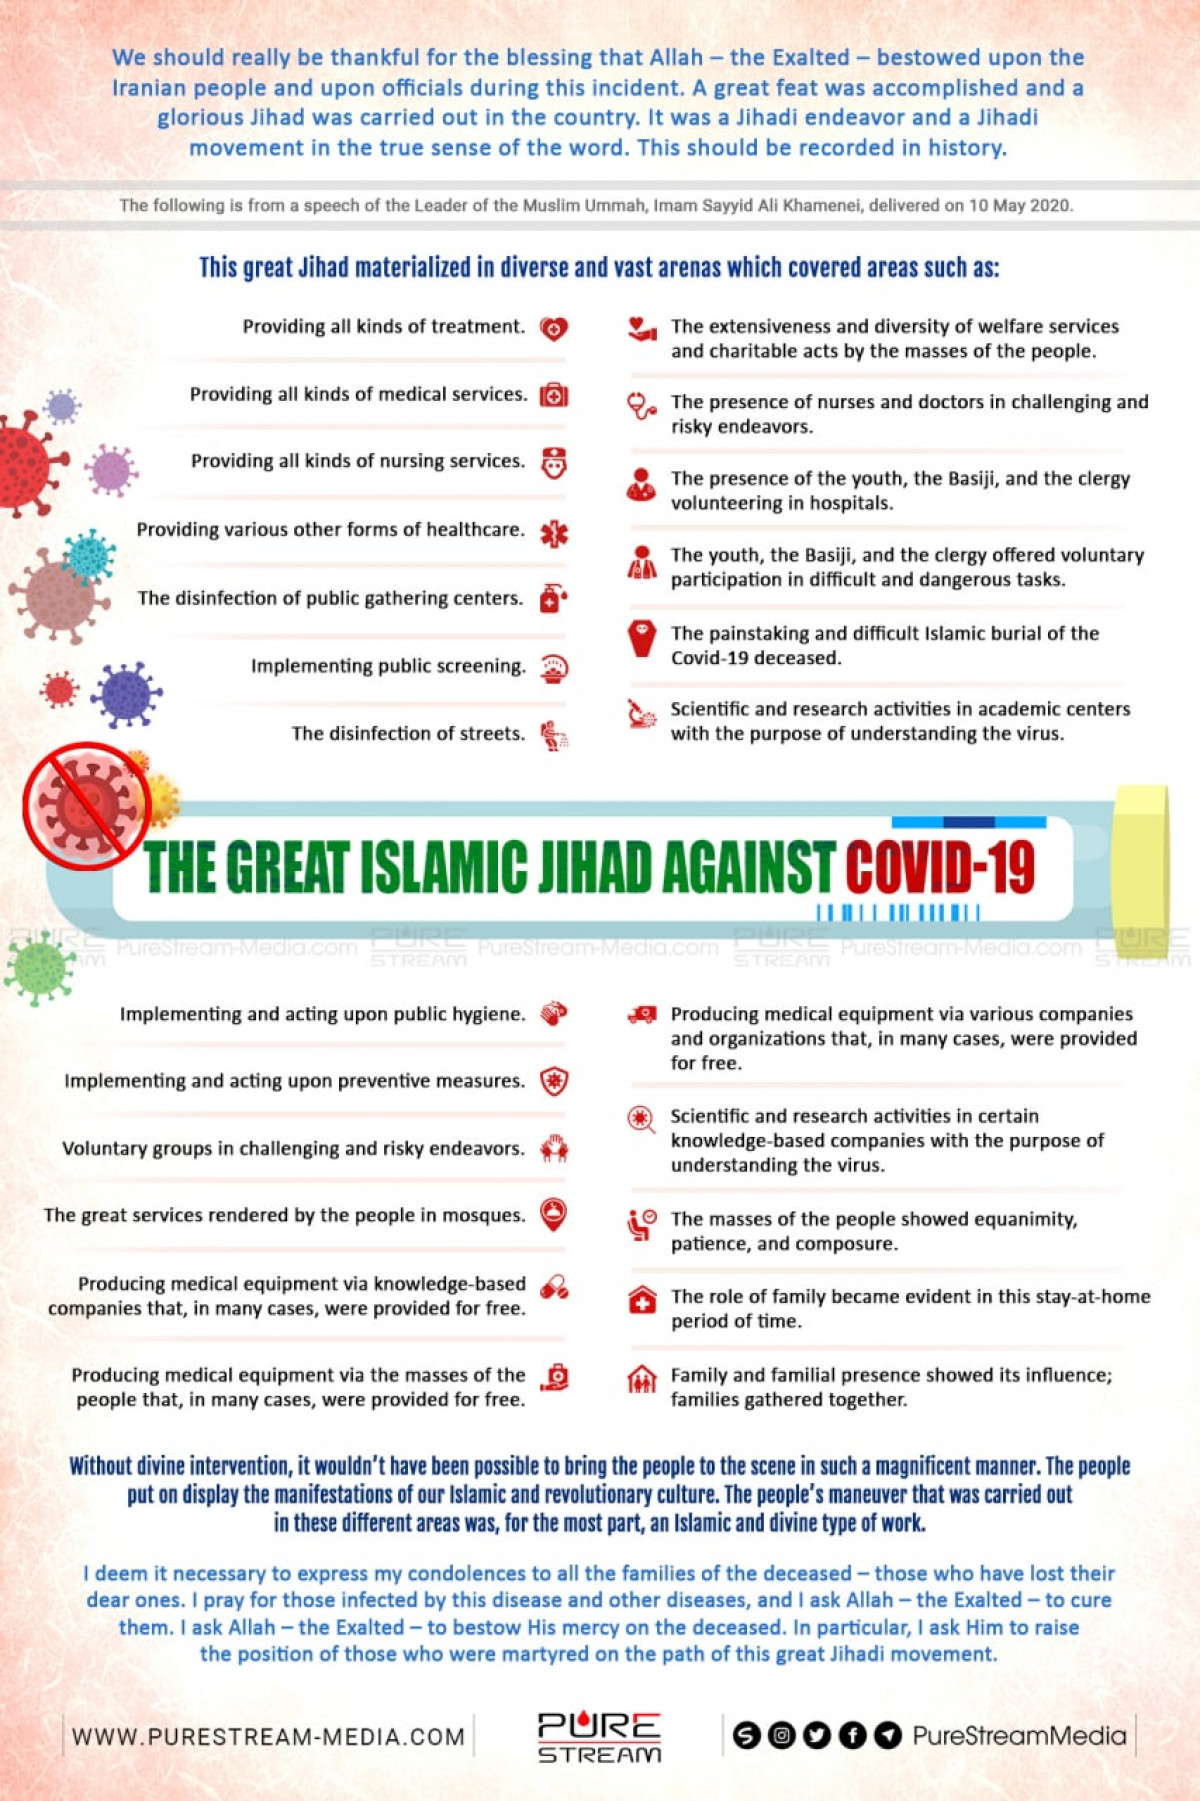 The great Islamic jihad against Covid_19